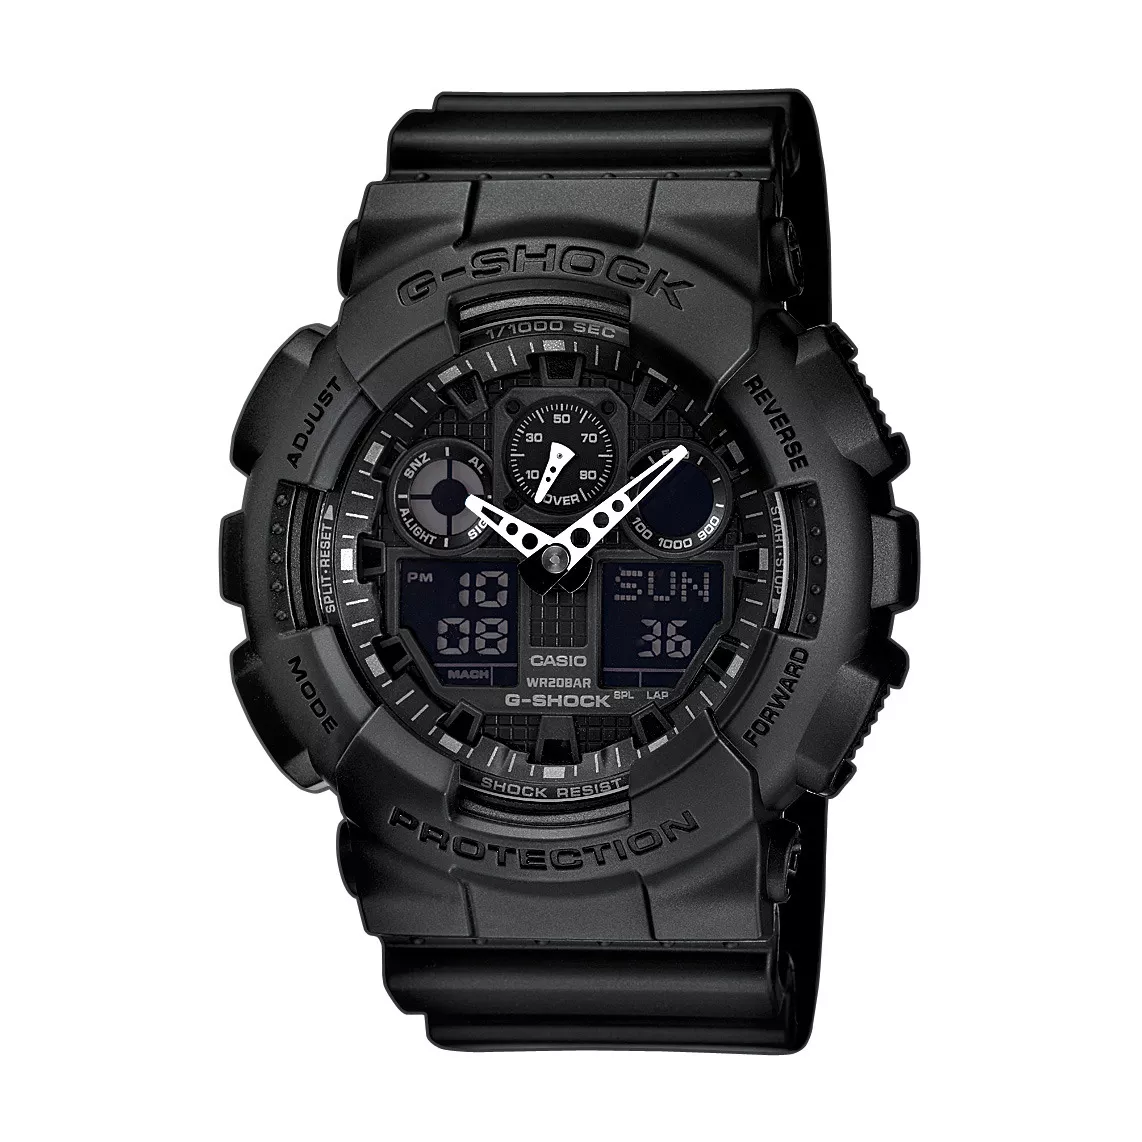 Casio GA-100-1A1ER G-Shock horloge